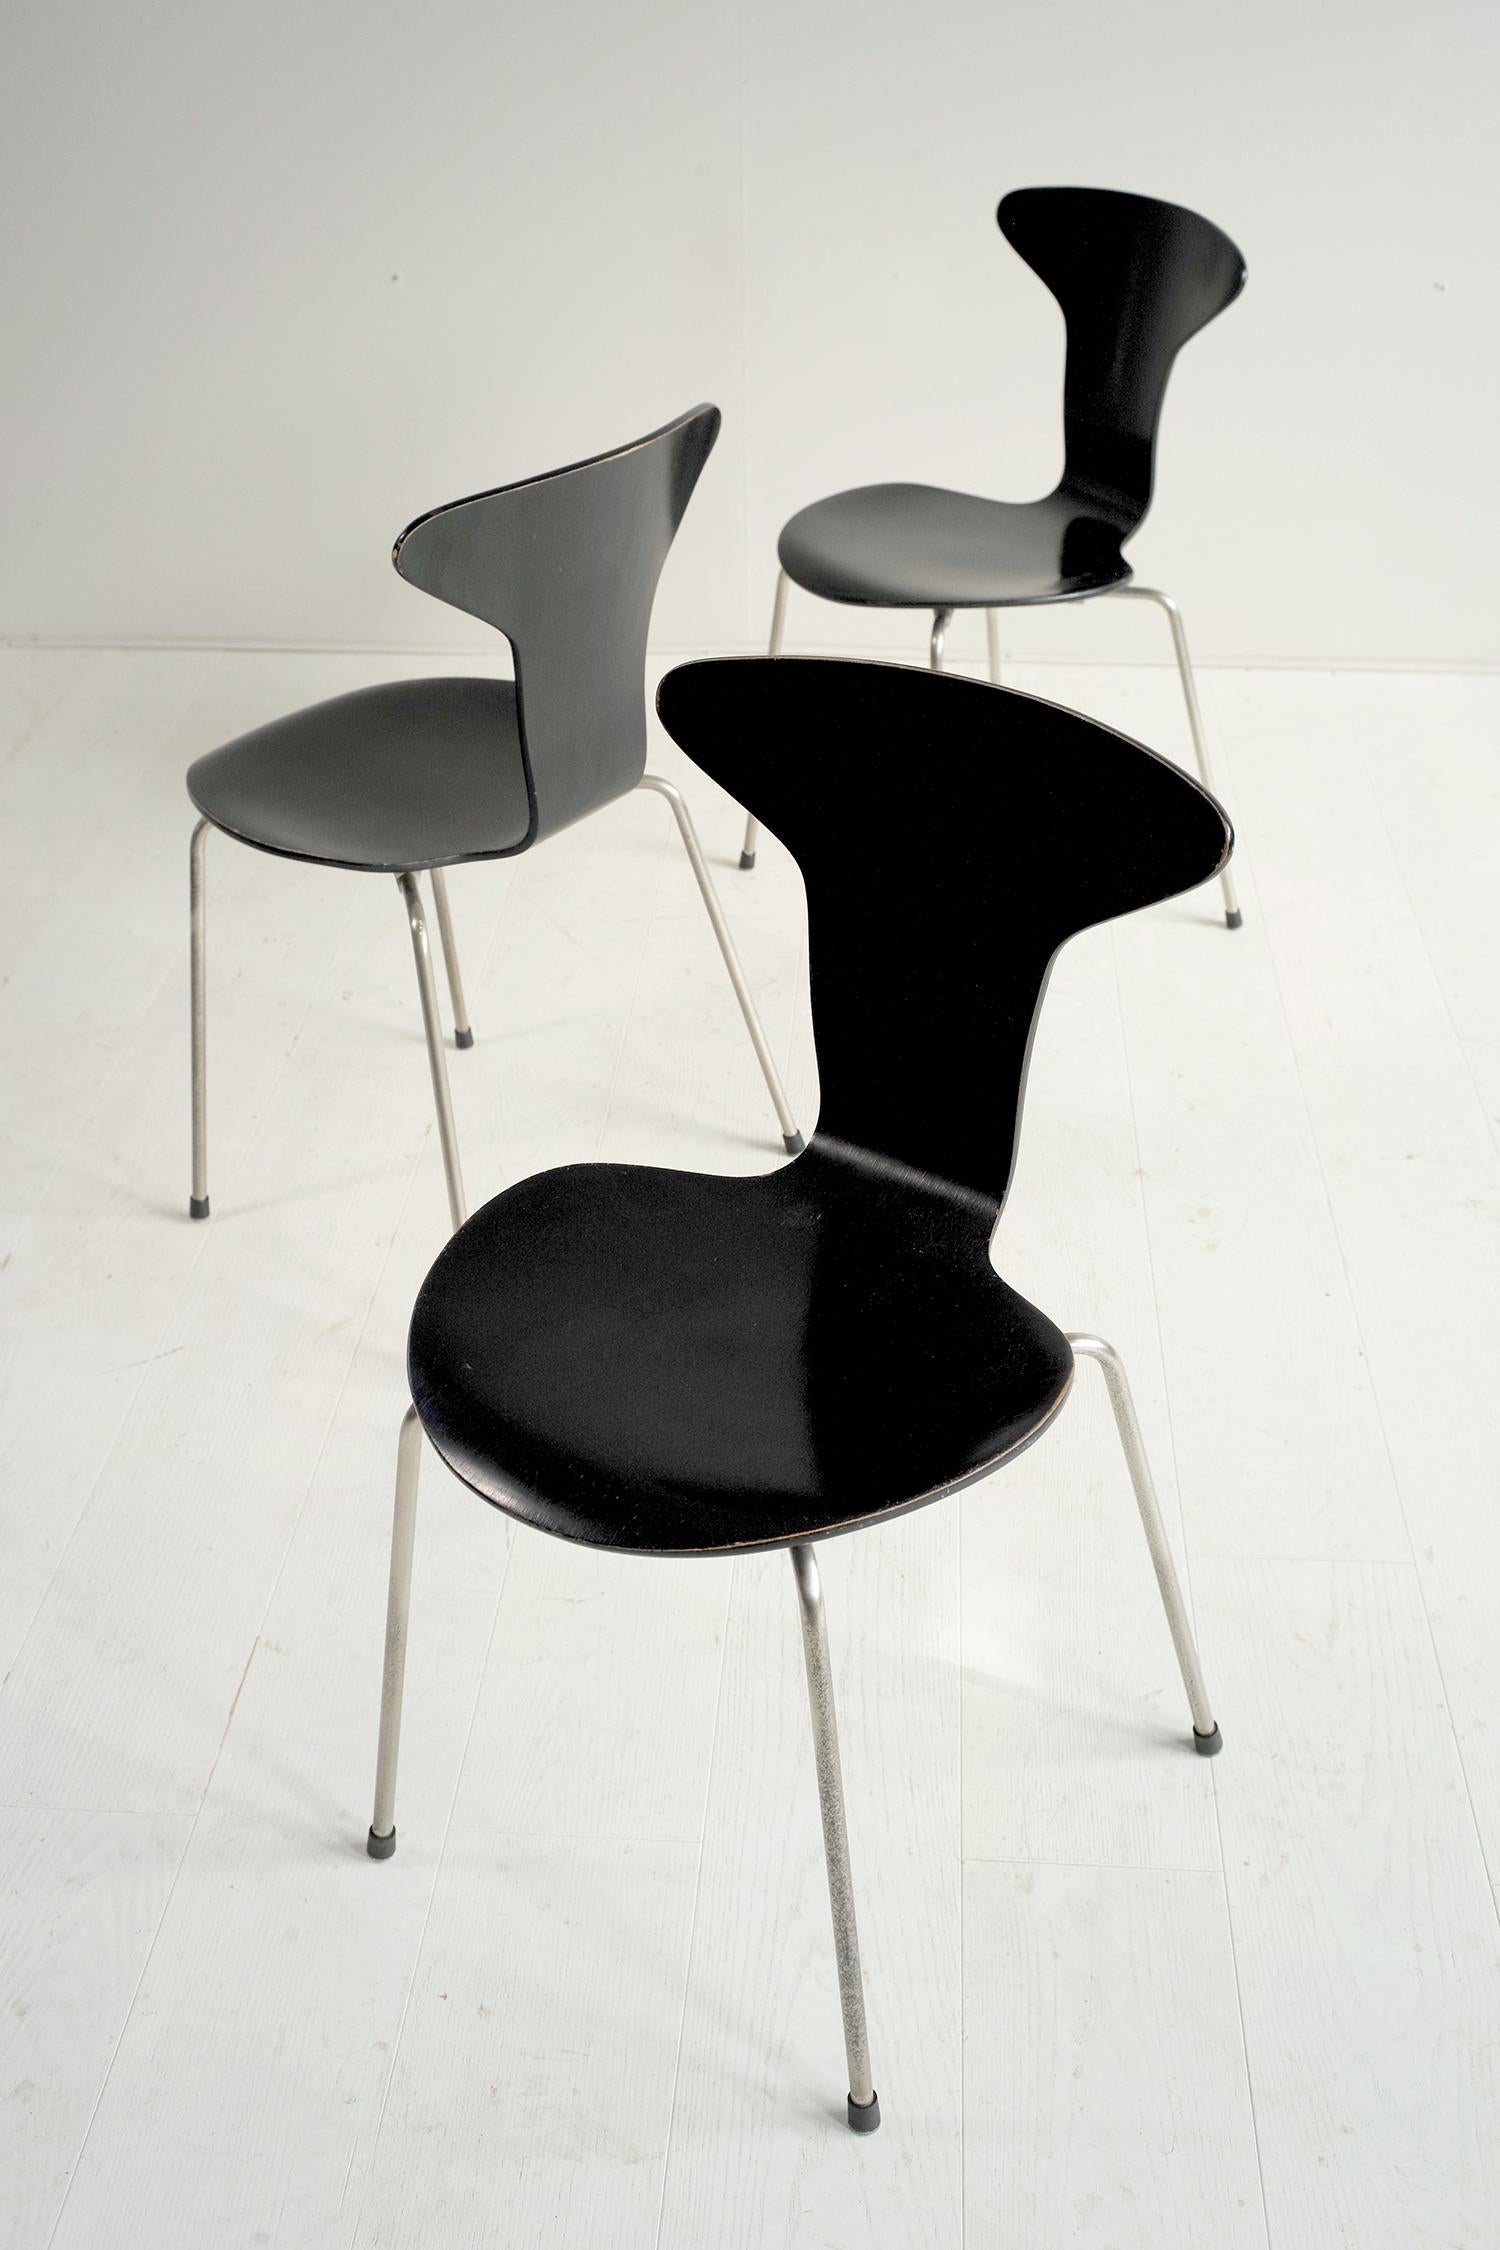 Danish Arne Jacobsen, Set of 3 Chairs 